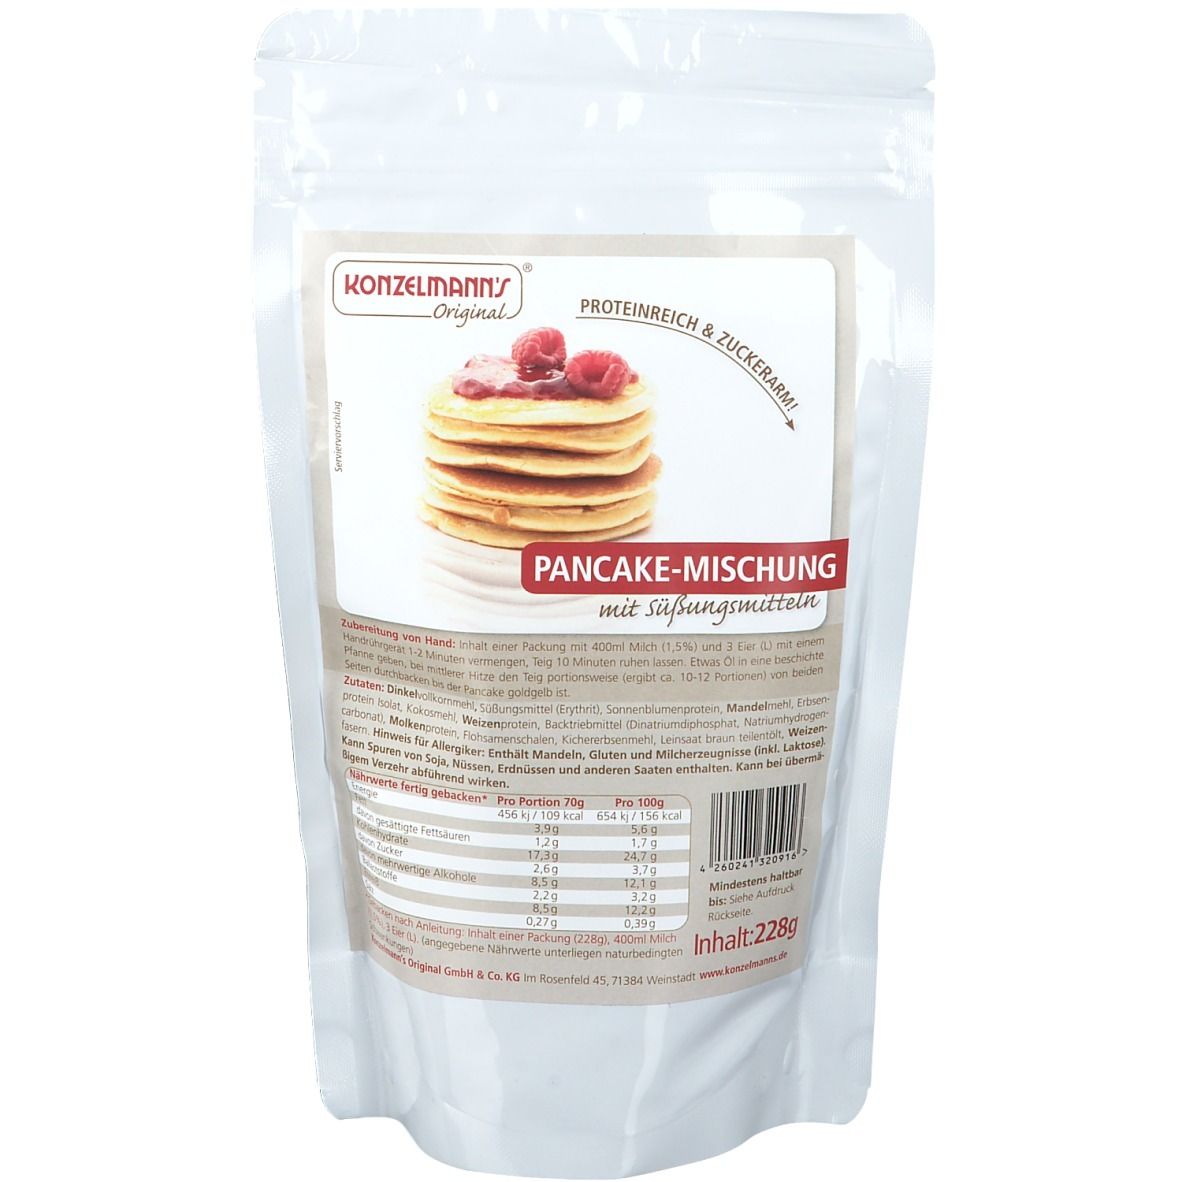 Image of Konzelmanns Original Pancake-Mischung